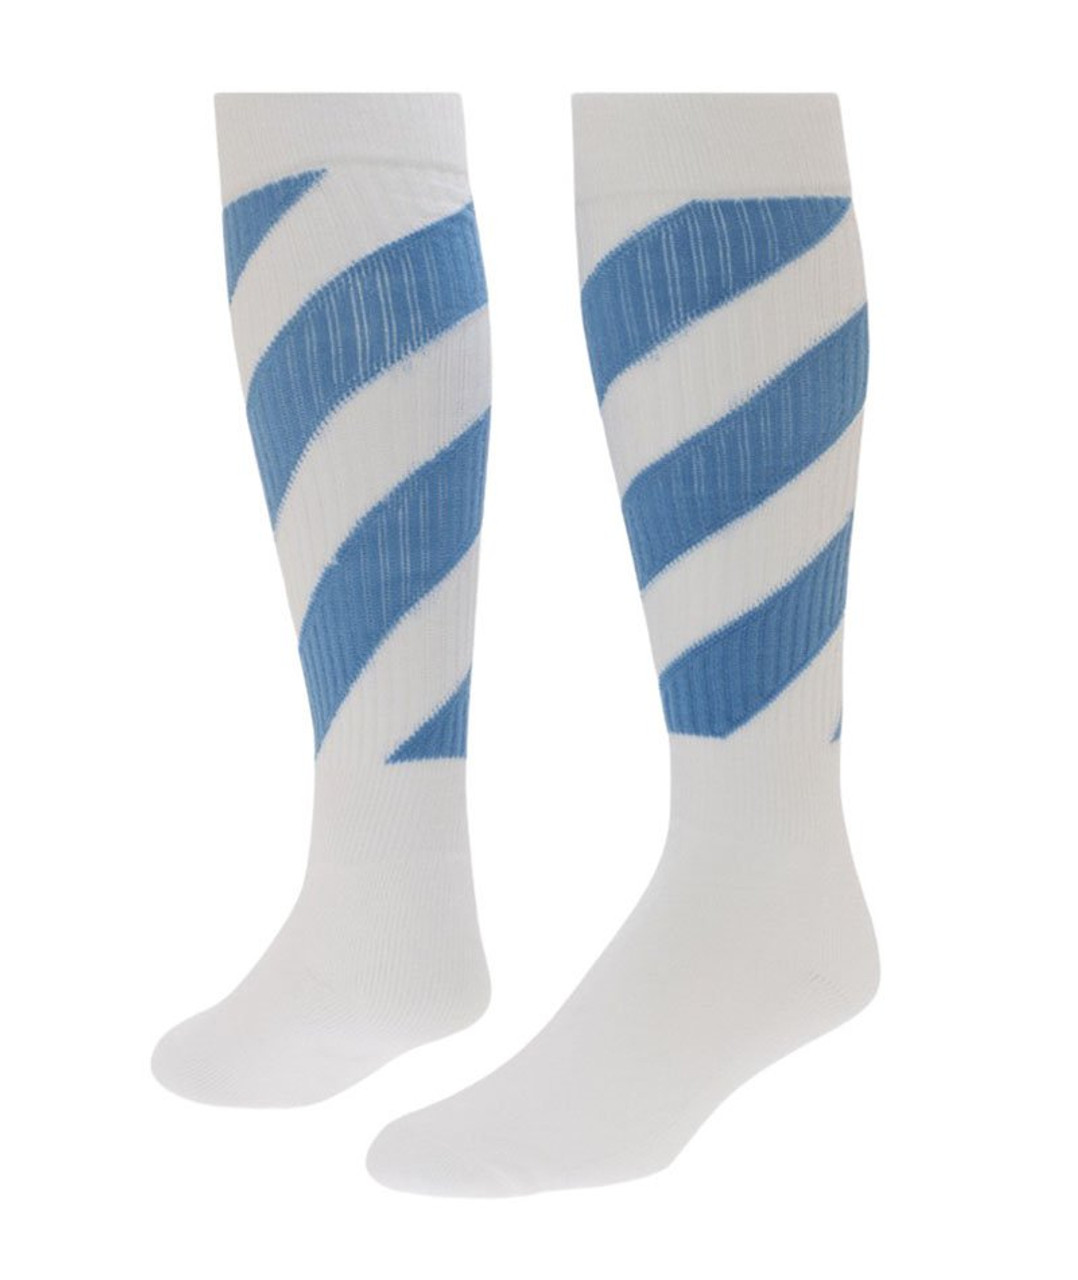 White & Light Blue Tornado Knee High Sports Socks